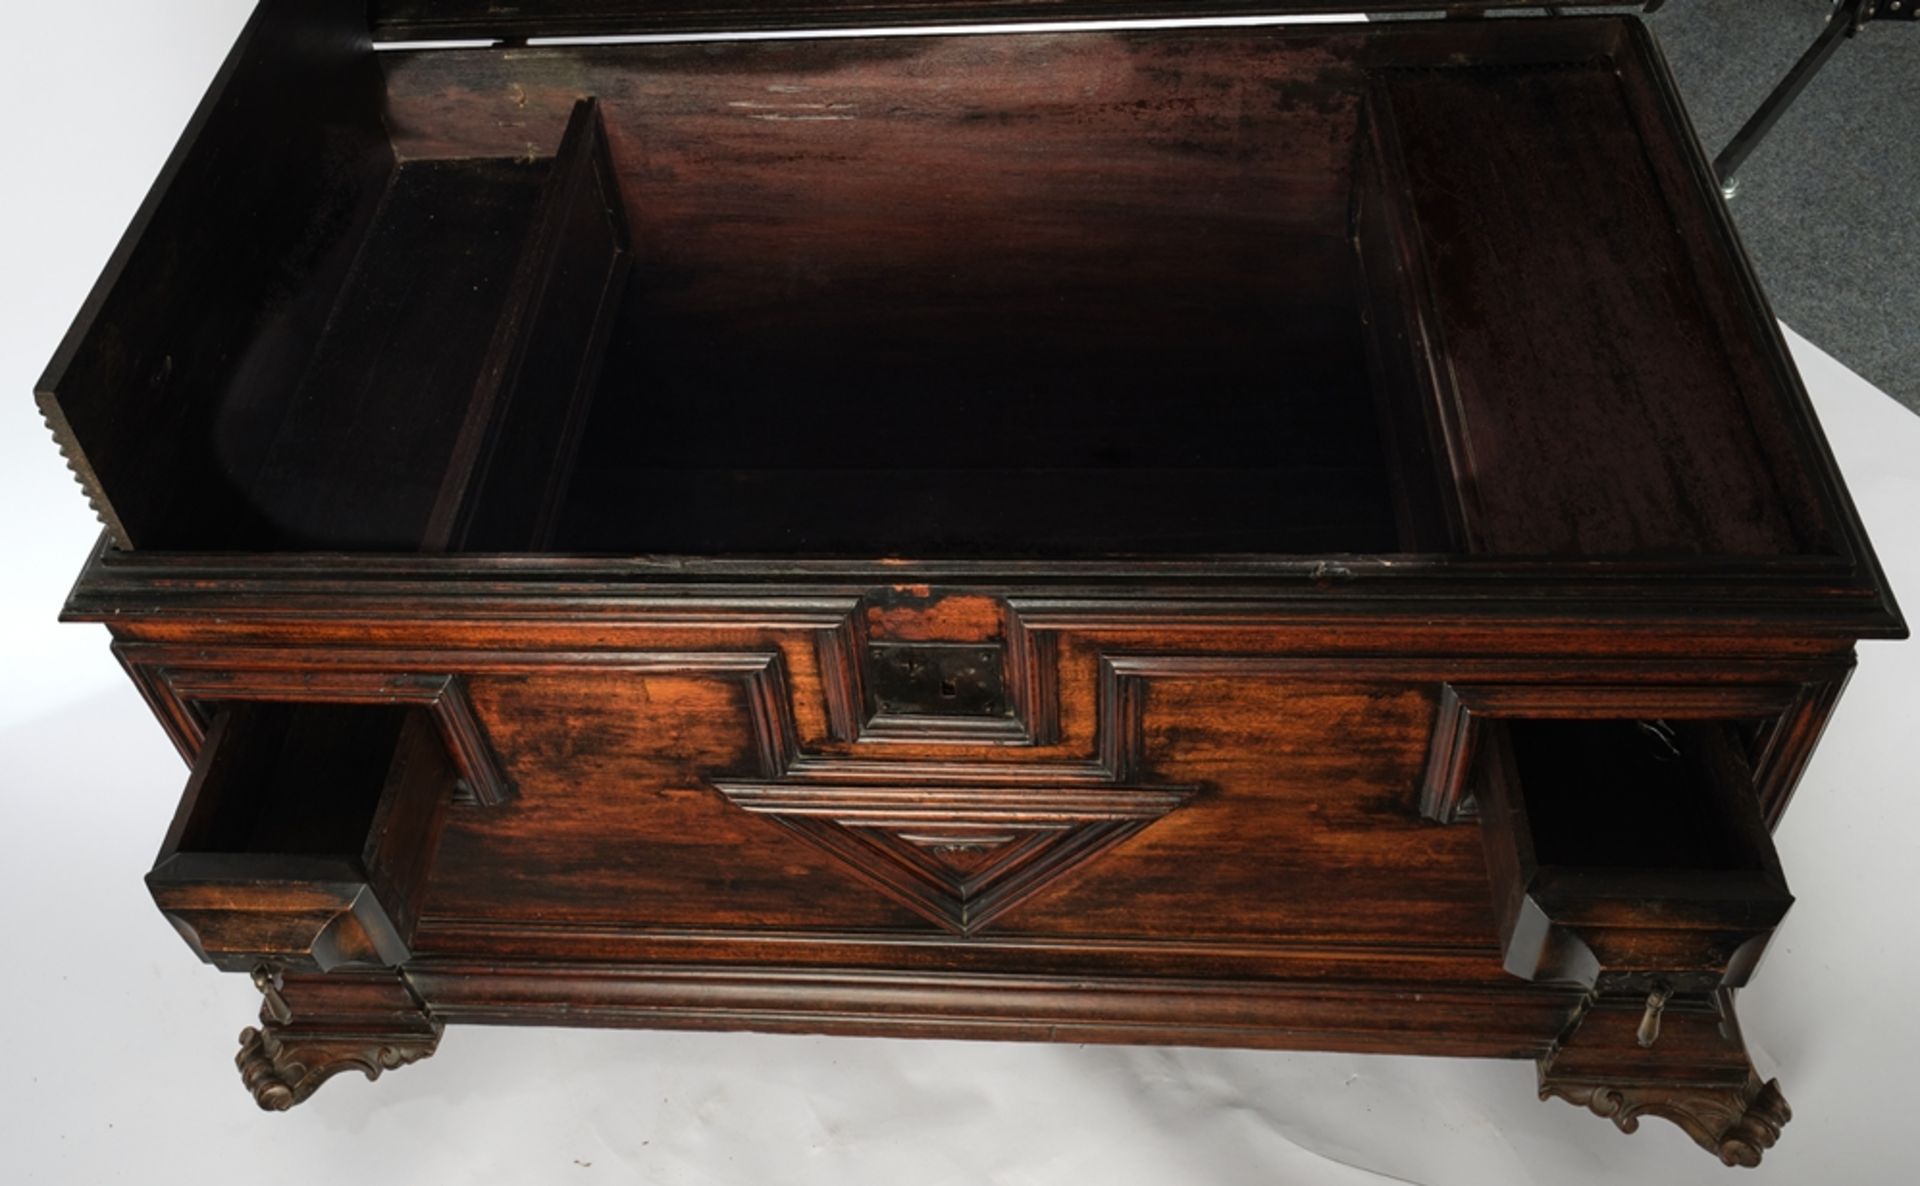 Baroque chest, Portugal/Brazil, 17th/18th century, reddish hardwood, rectangular body with flat lid - Image 3 of 7